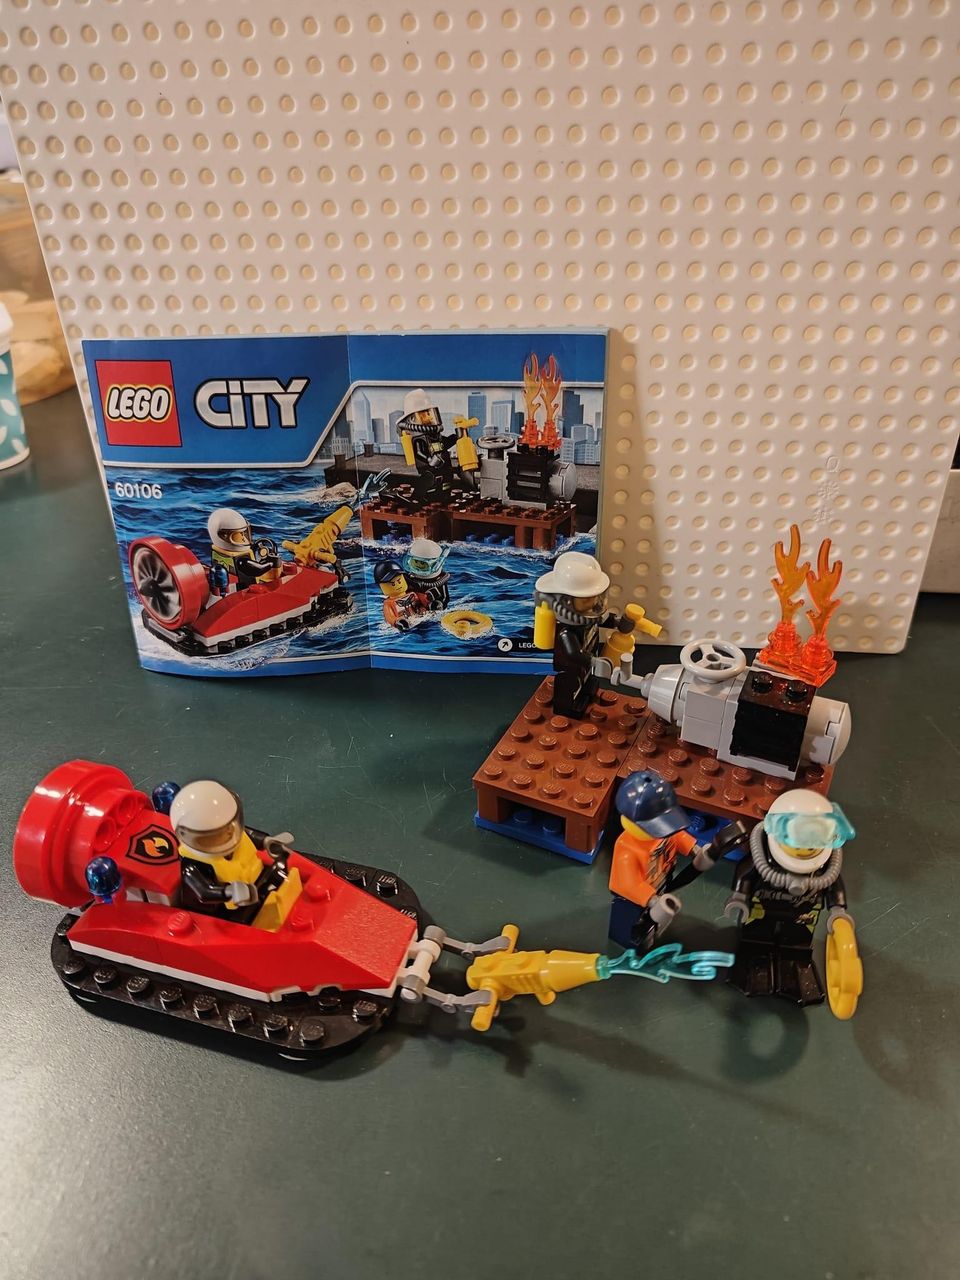 Lego 60106, City - Fire starter set